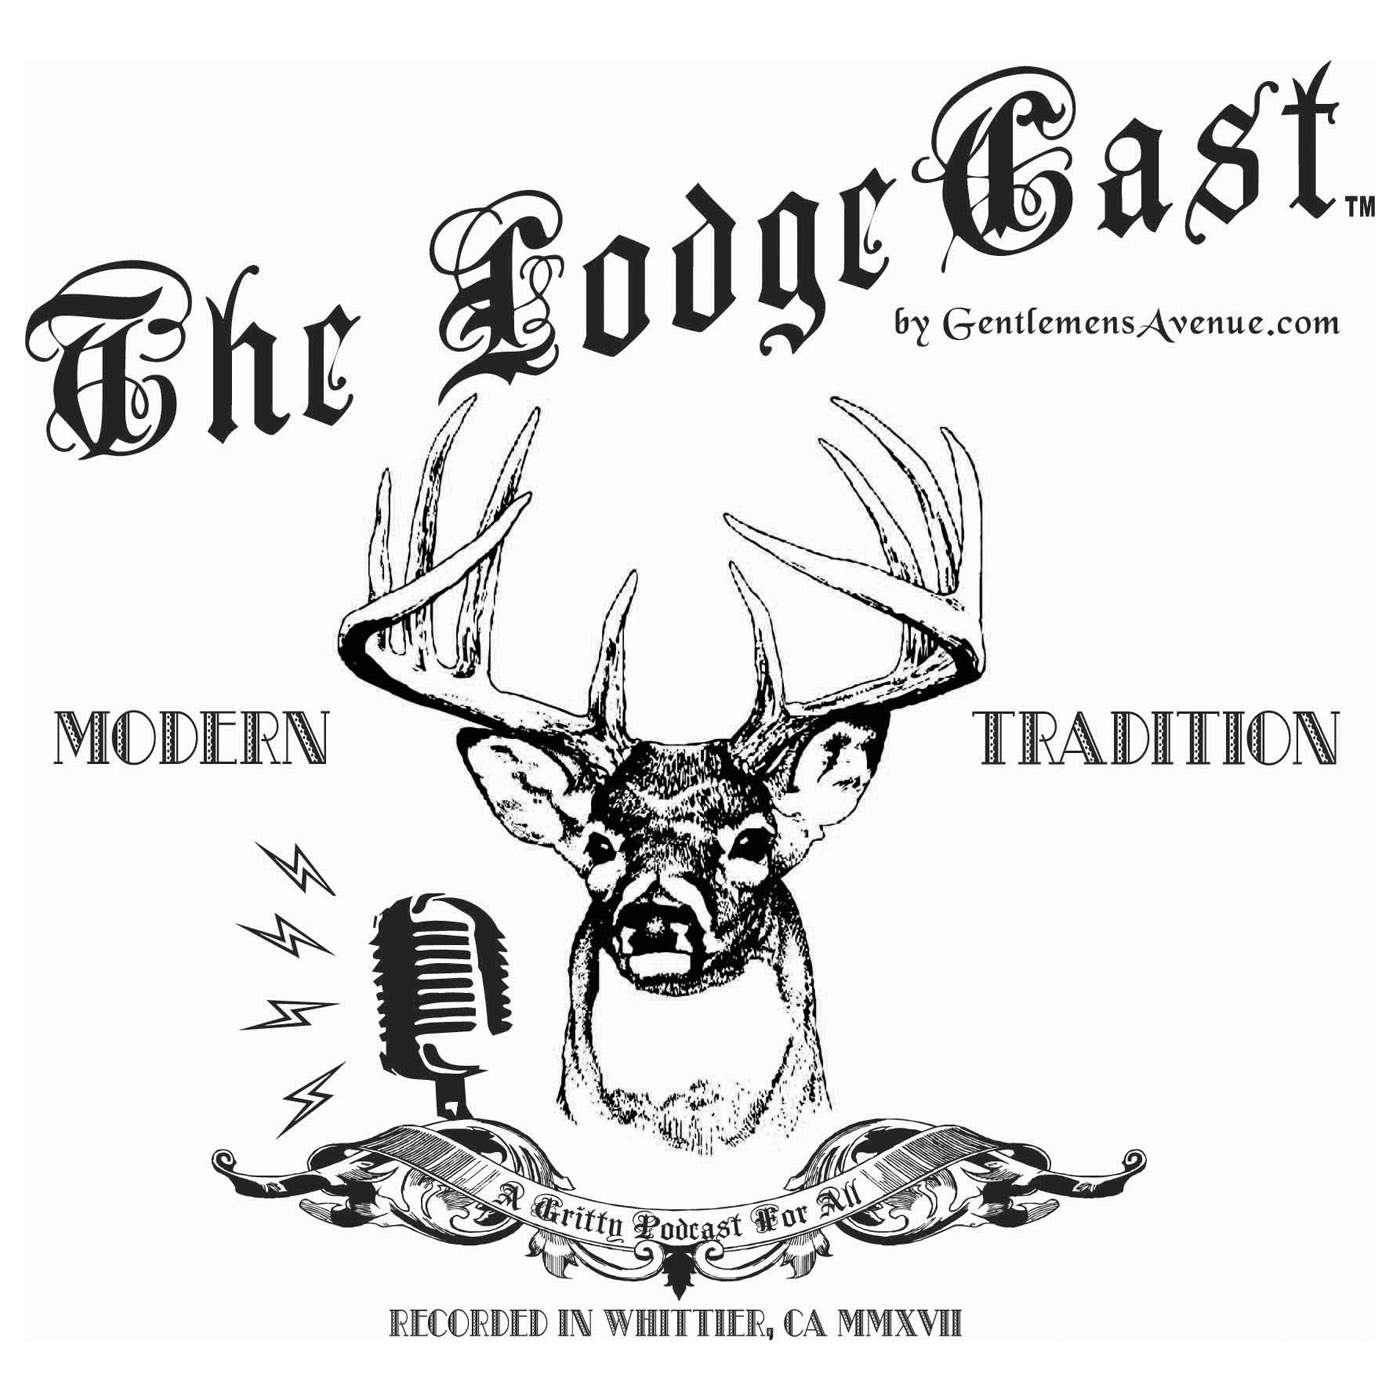 The LodgeCast